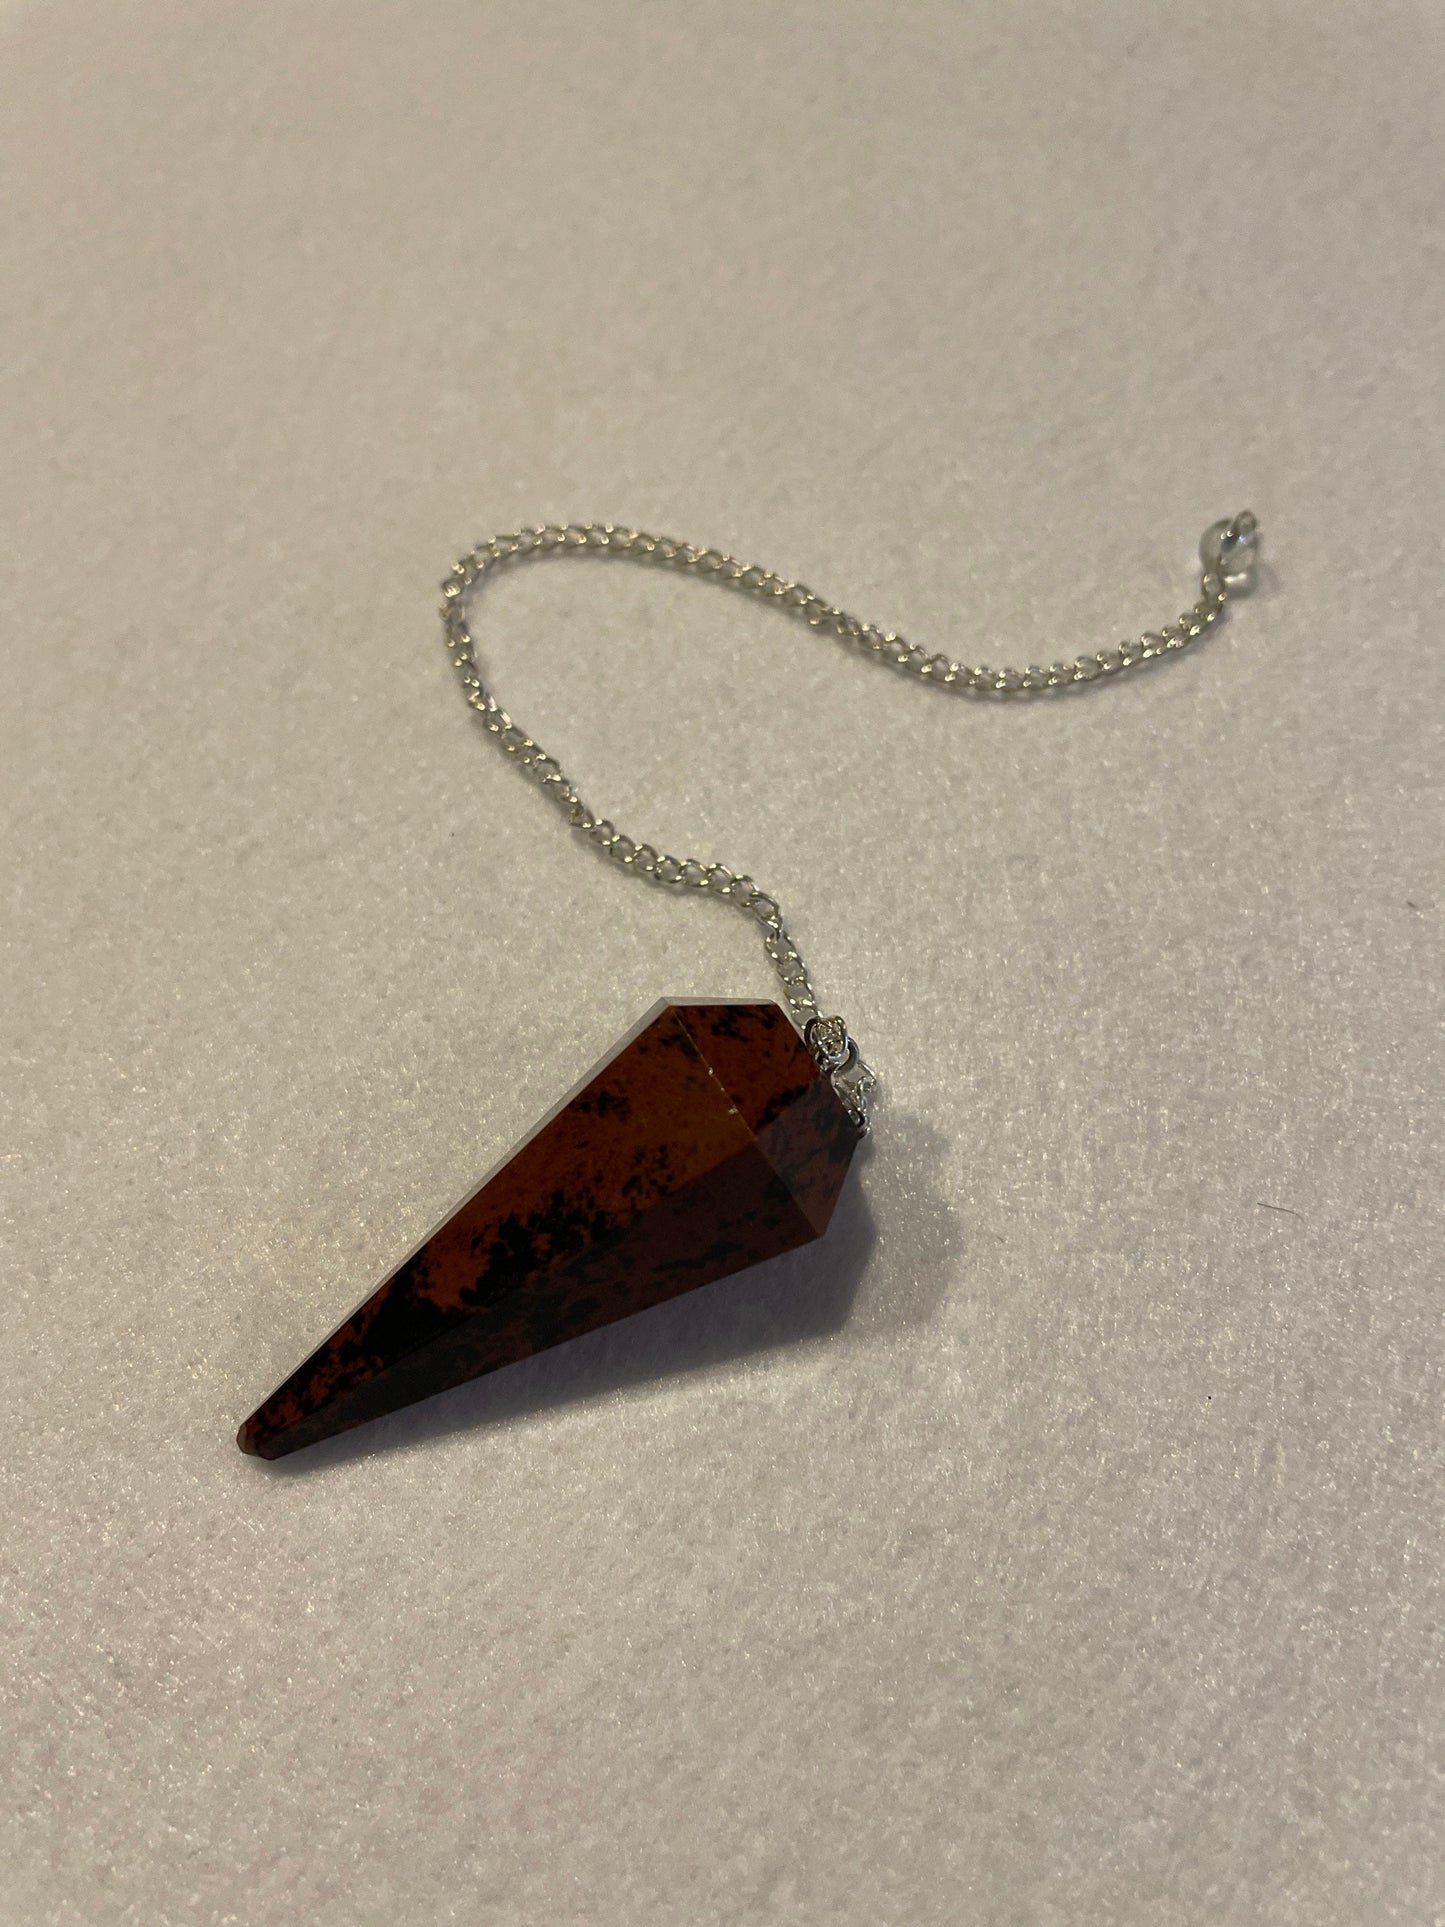 Beautiful Mahogany Obsidian Pendulum 2” stone with chain 9”.